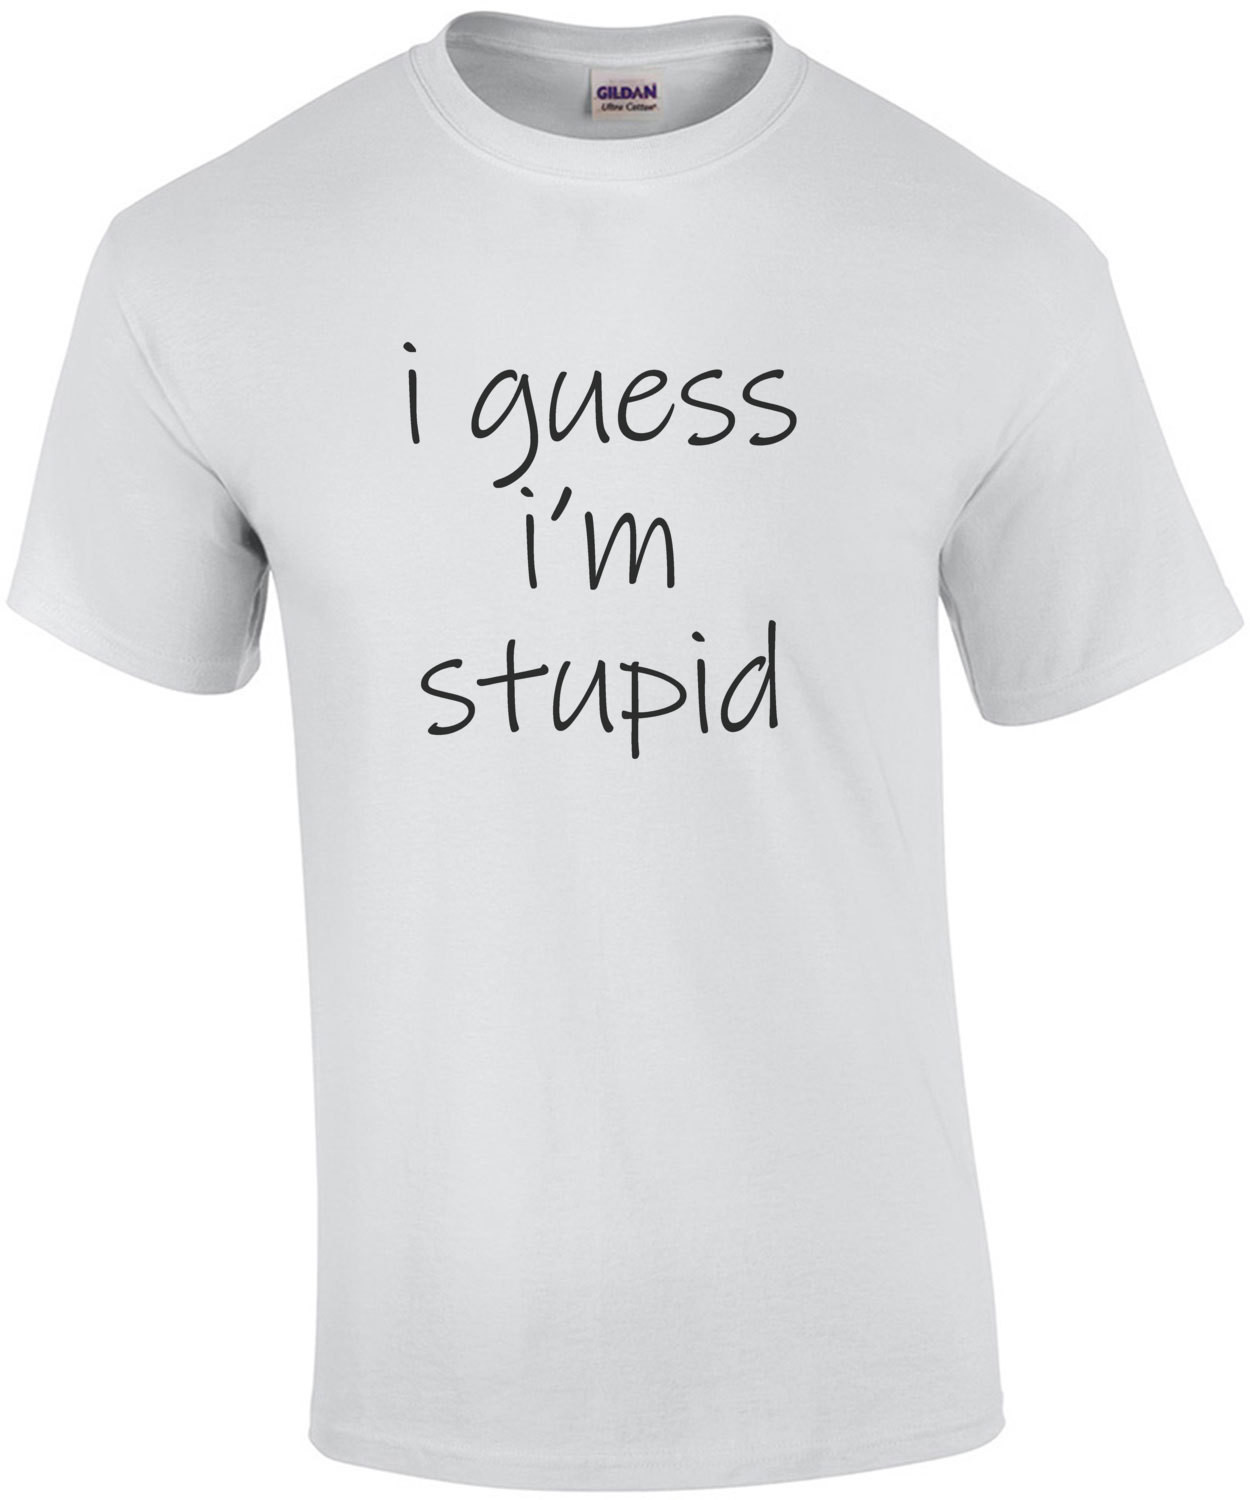 I guess I'm stupid - funny couple's t-shirt